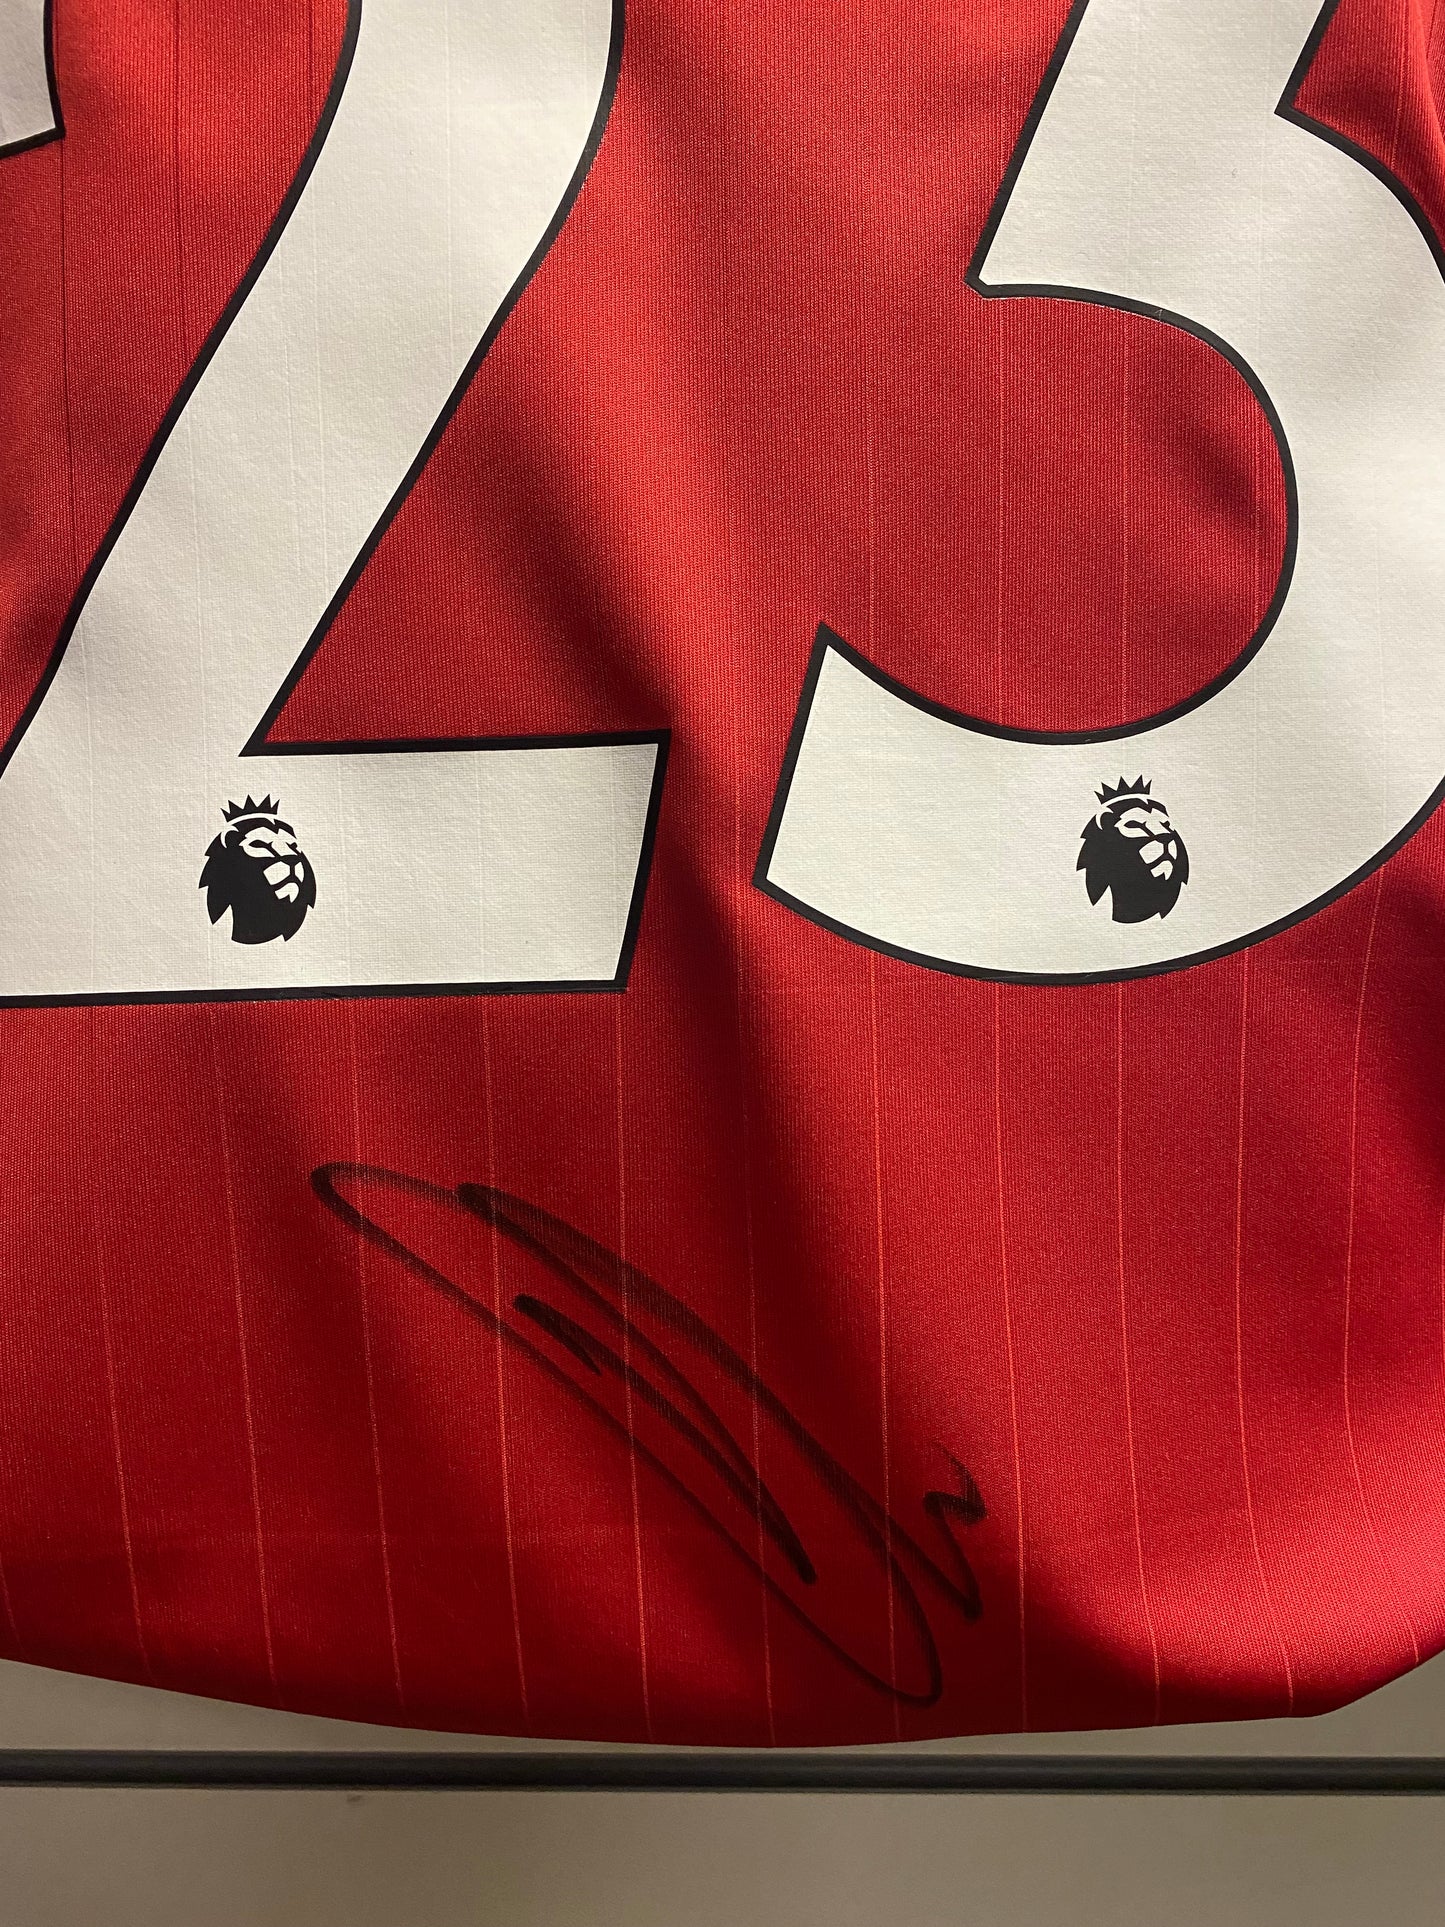 Luke Shaw - Manchester United hand-signed replica shirt - MUFC memorabilia, football shirt (UNFRAMED)